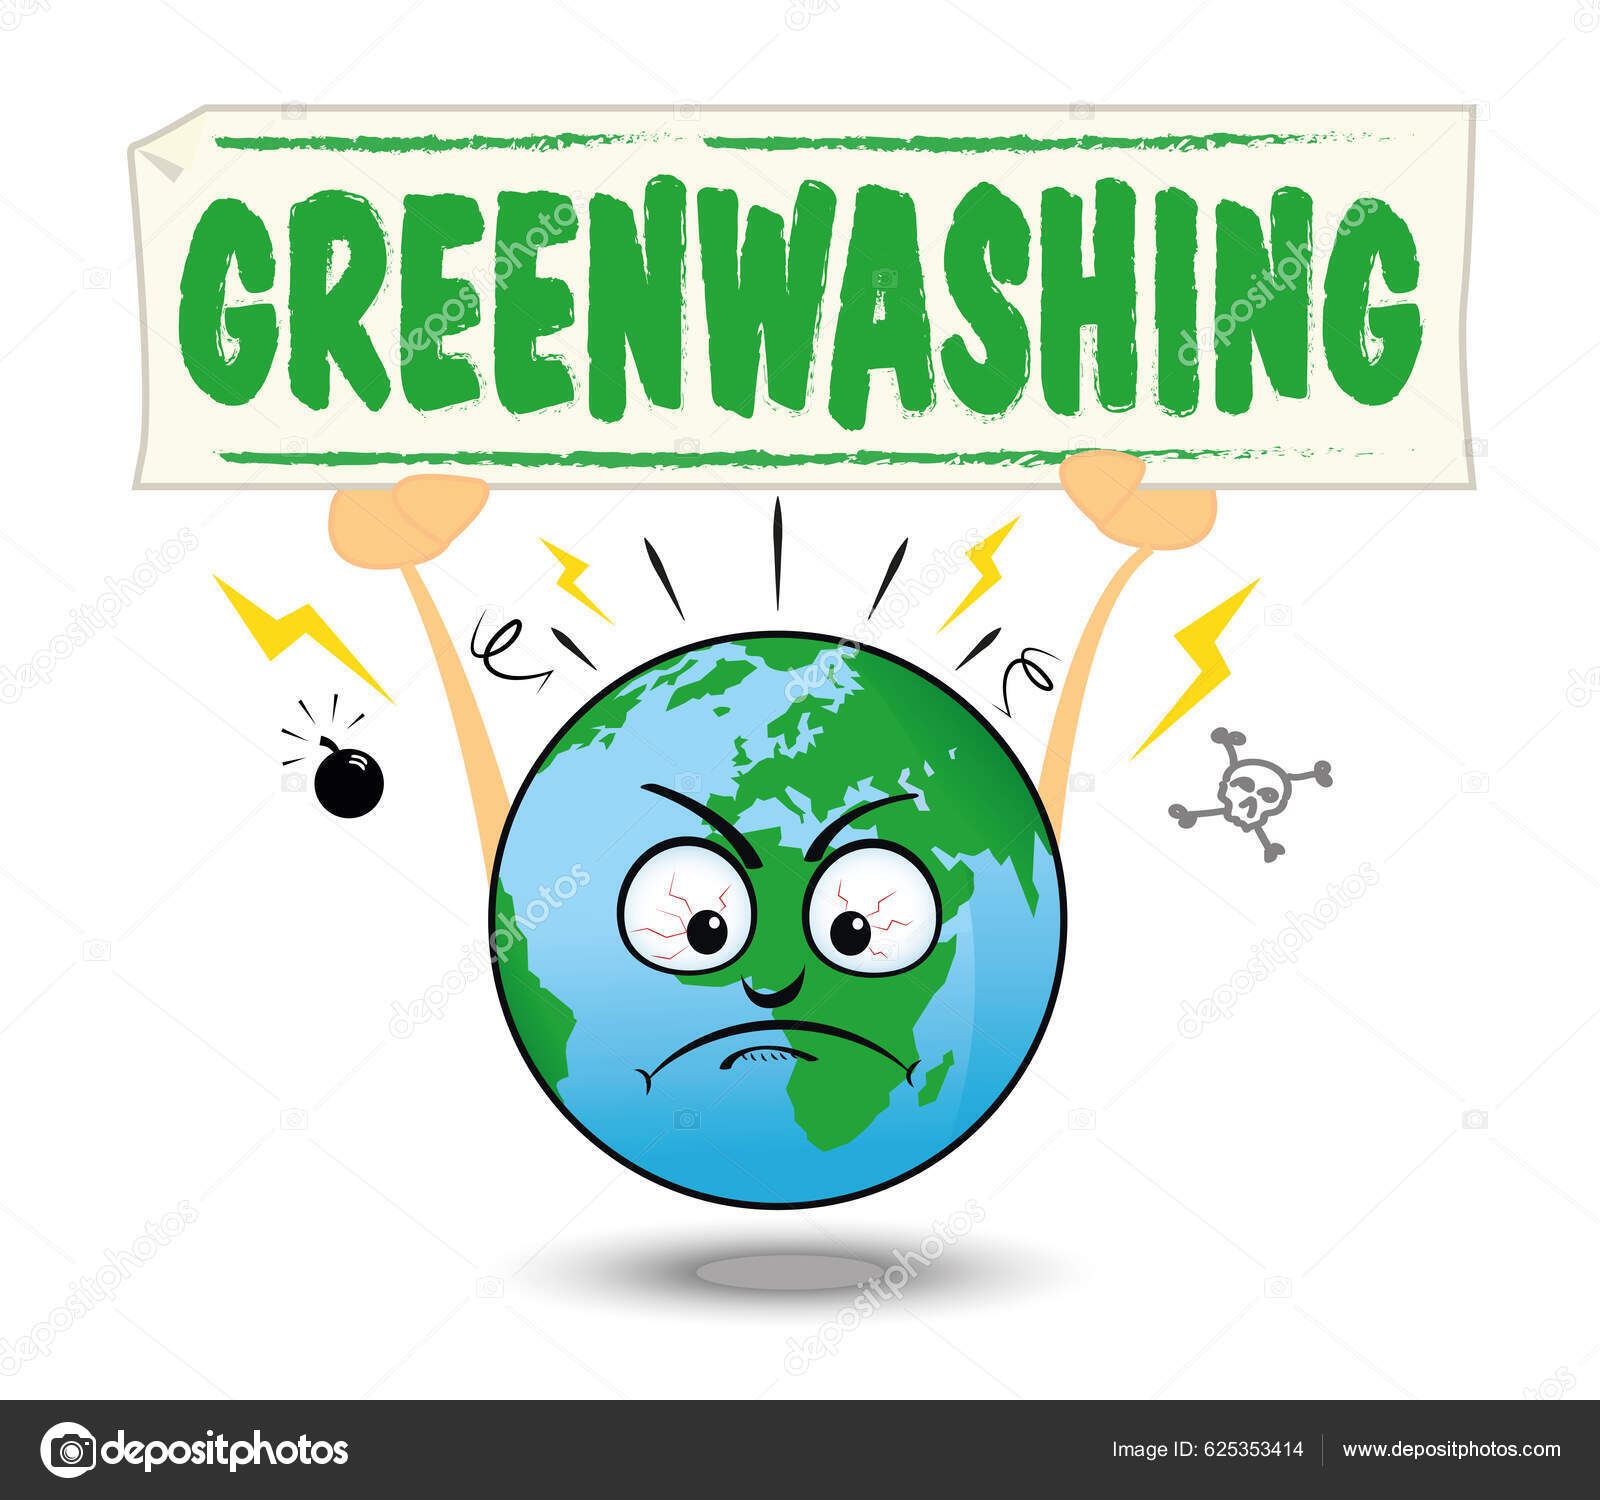 17 Greenwashing Vector Images | Depositphotos